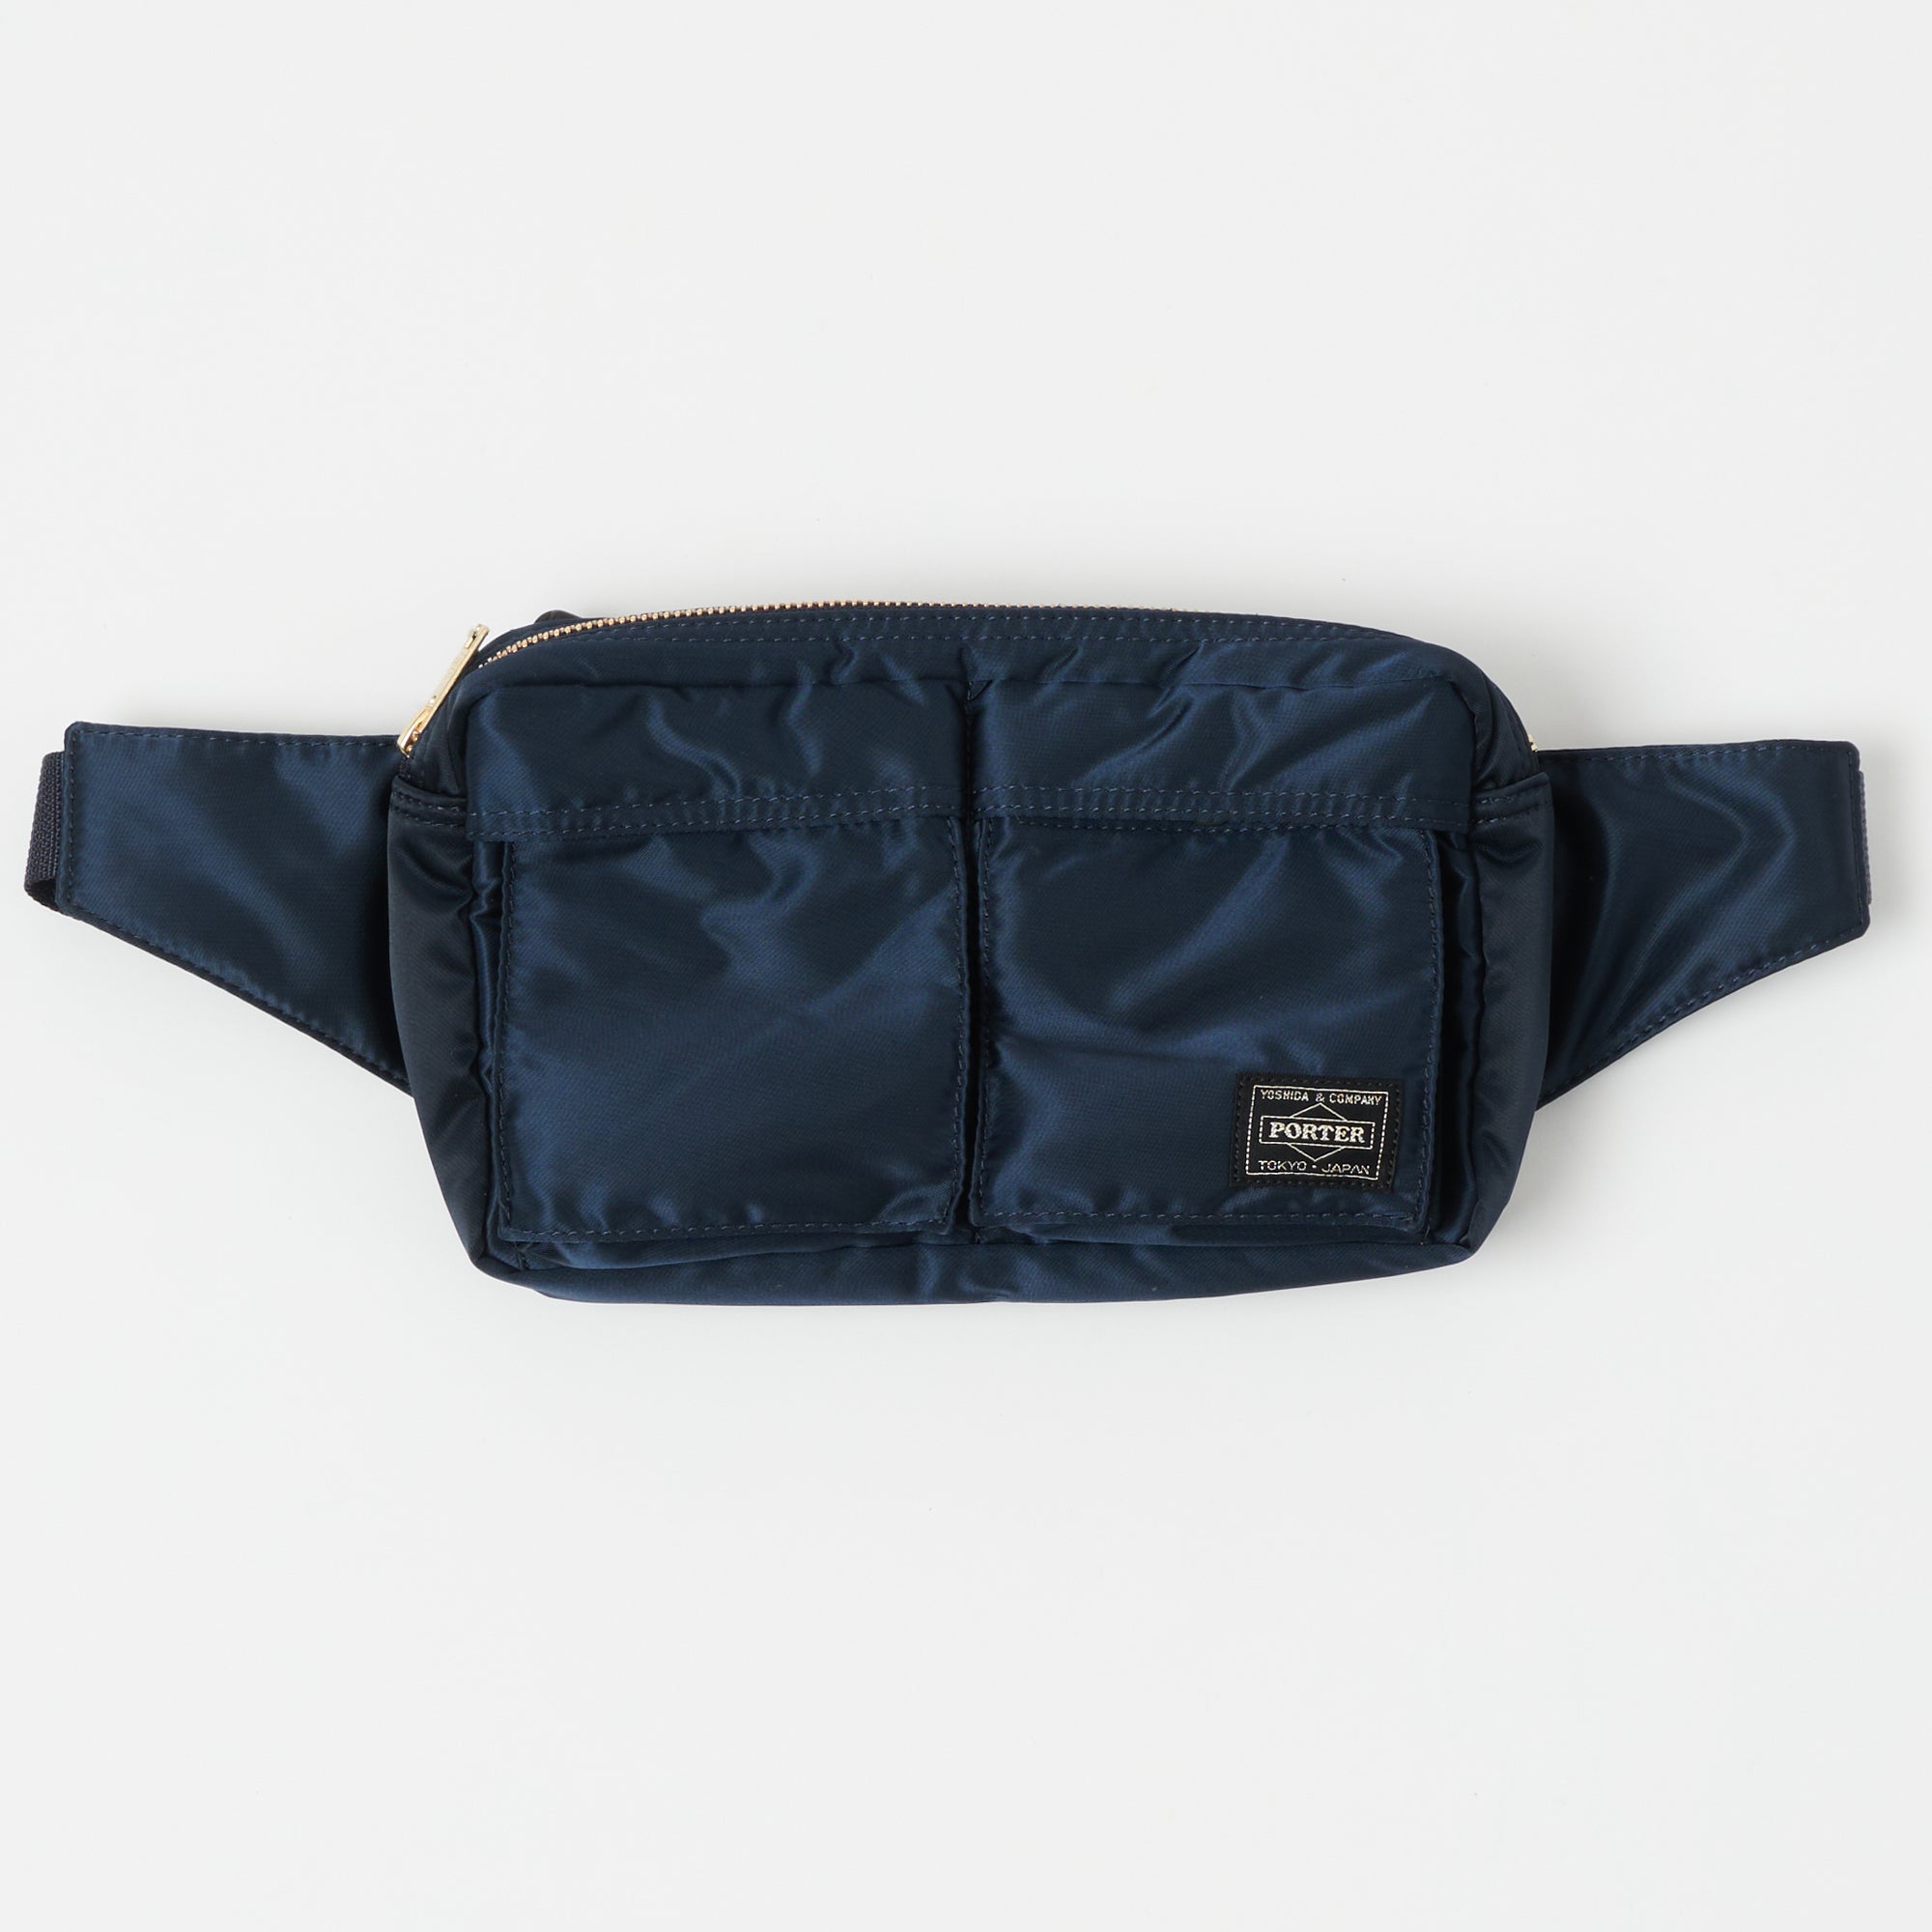 Porter-Yoshida & Co. Tanker waist bag, Blue